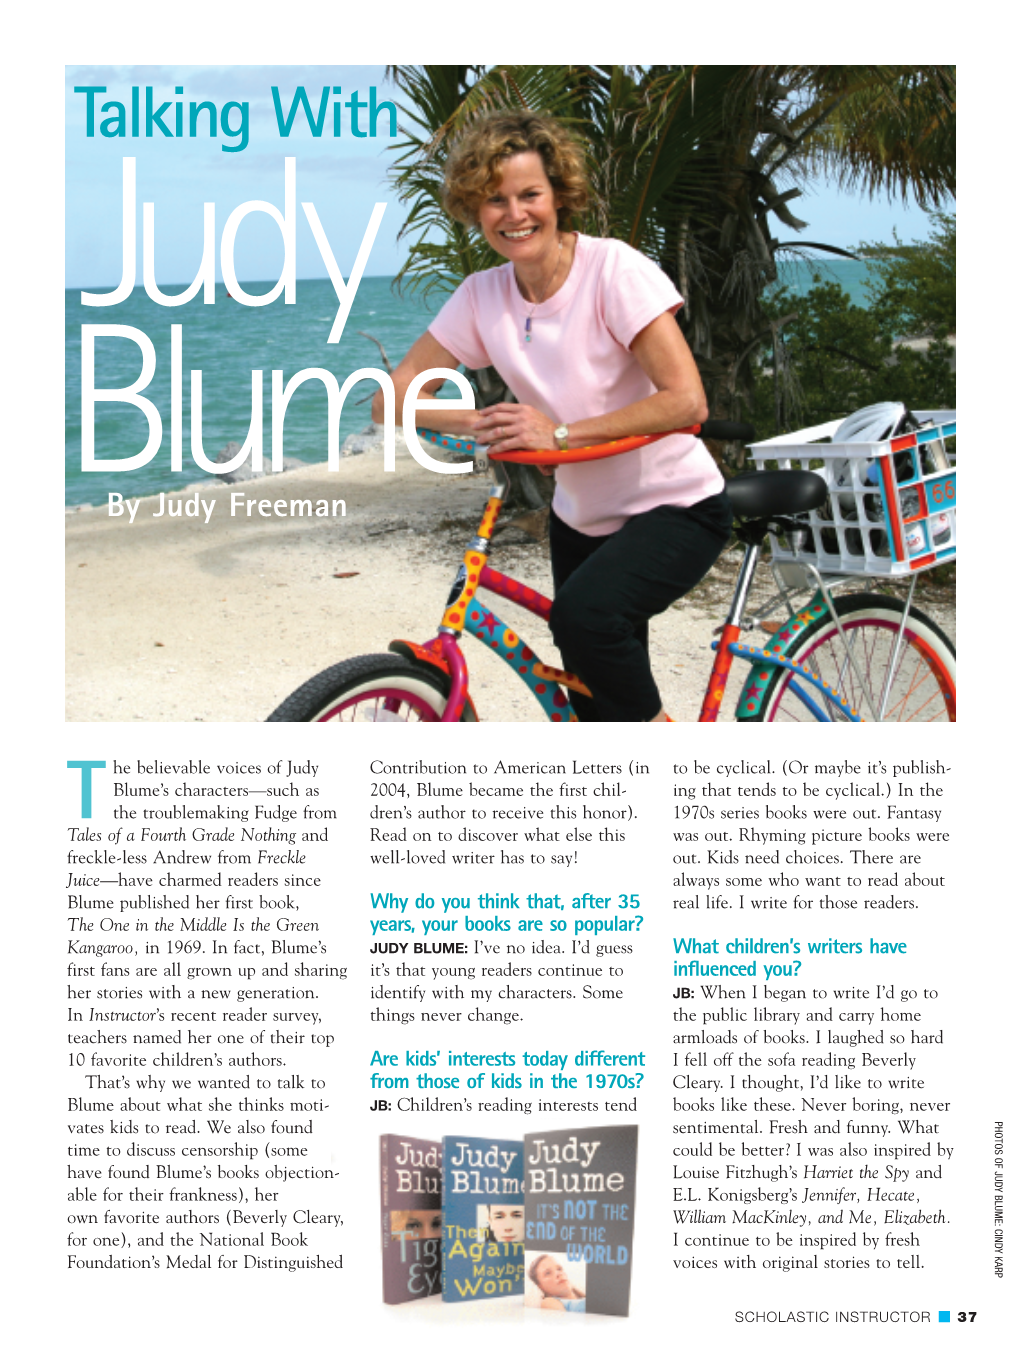 Talking with Judy Blume by Judy Freeman